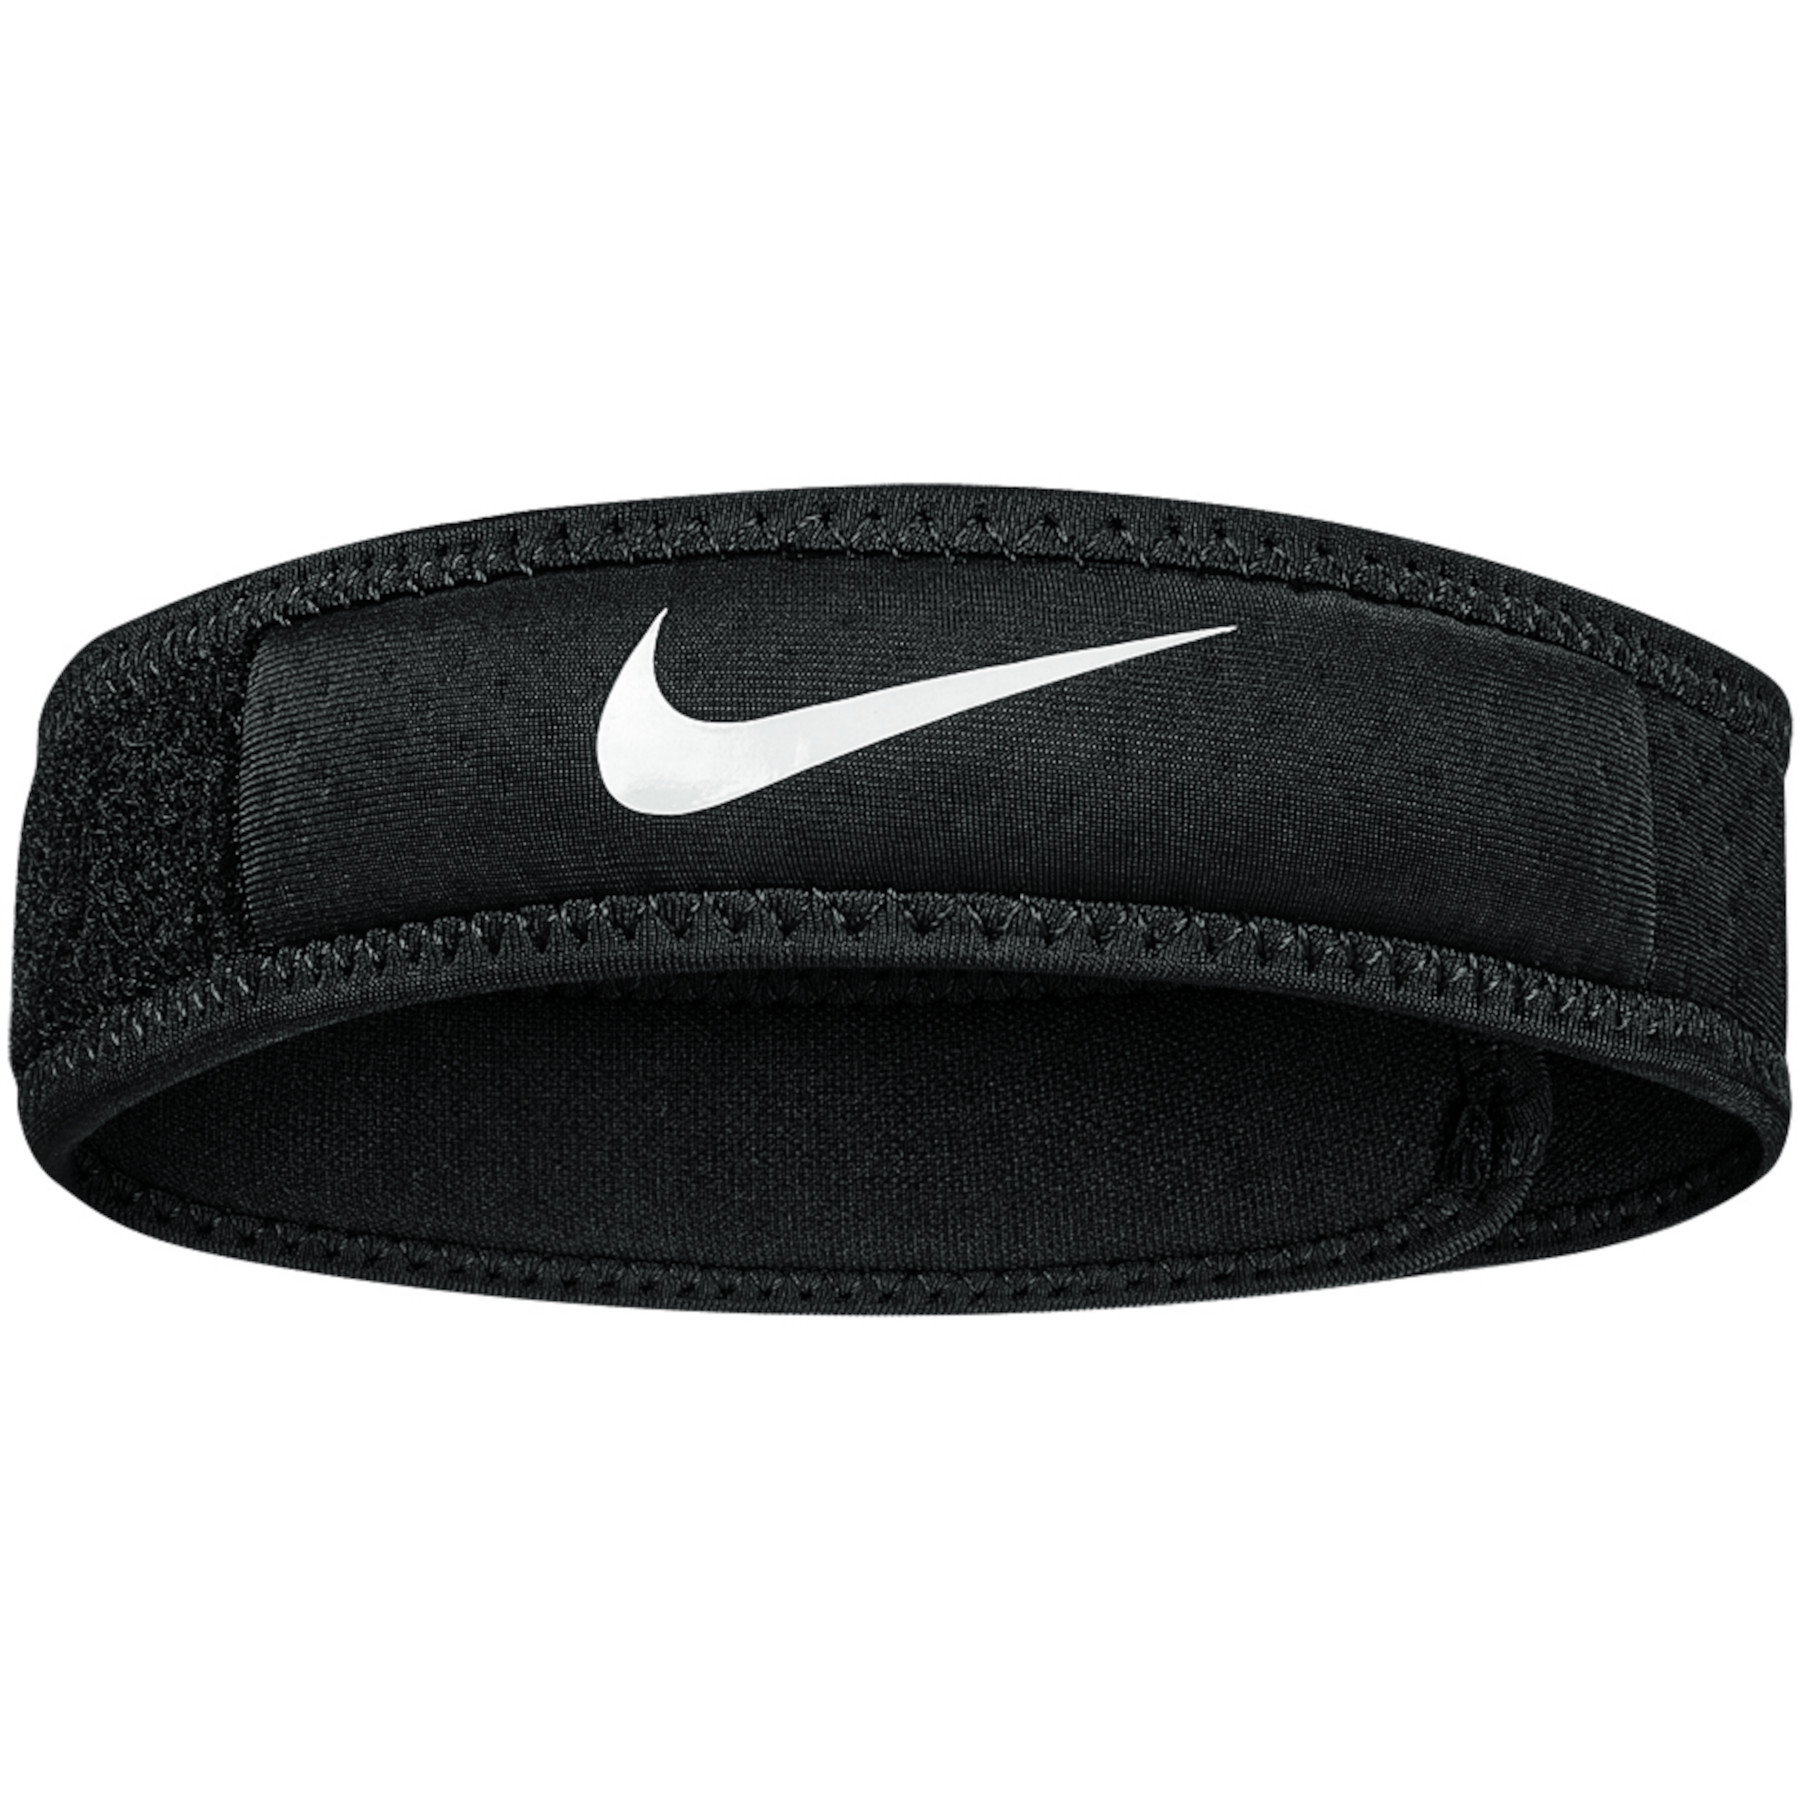 Picture of Nike Pro Patella Band 3.0 - black/white 010